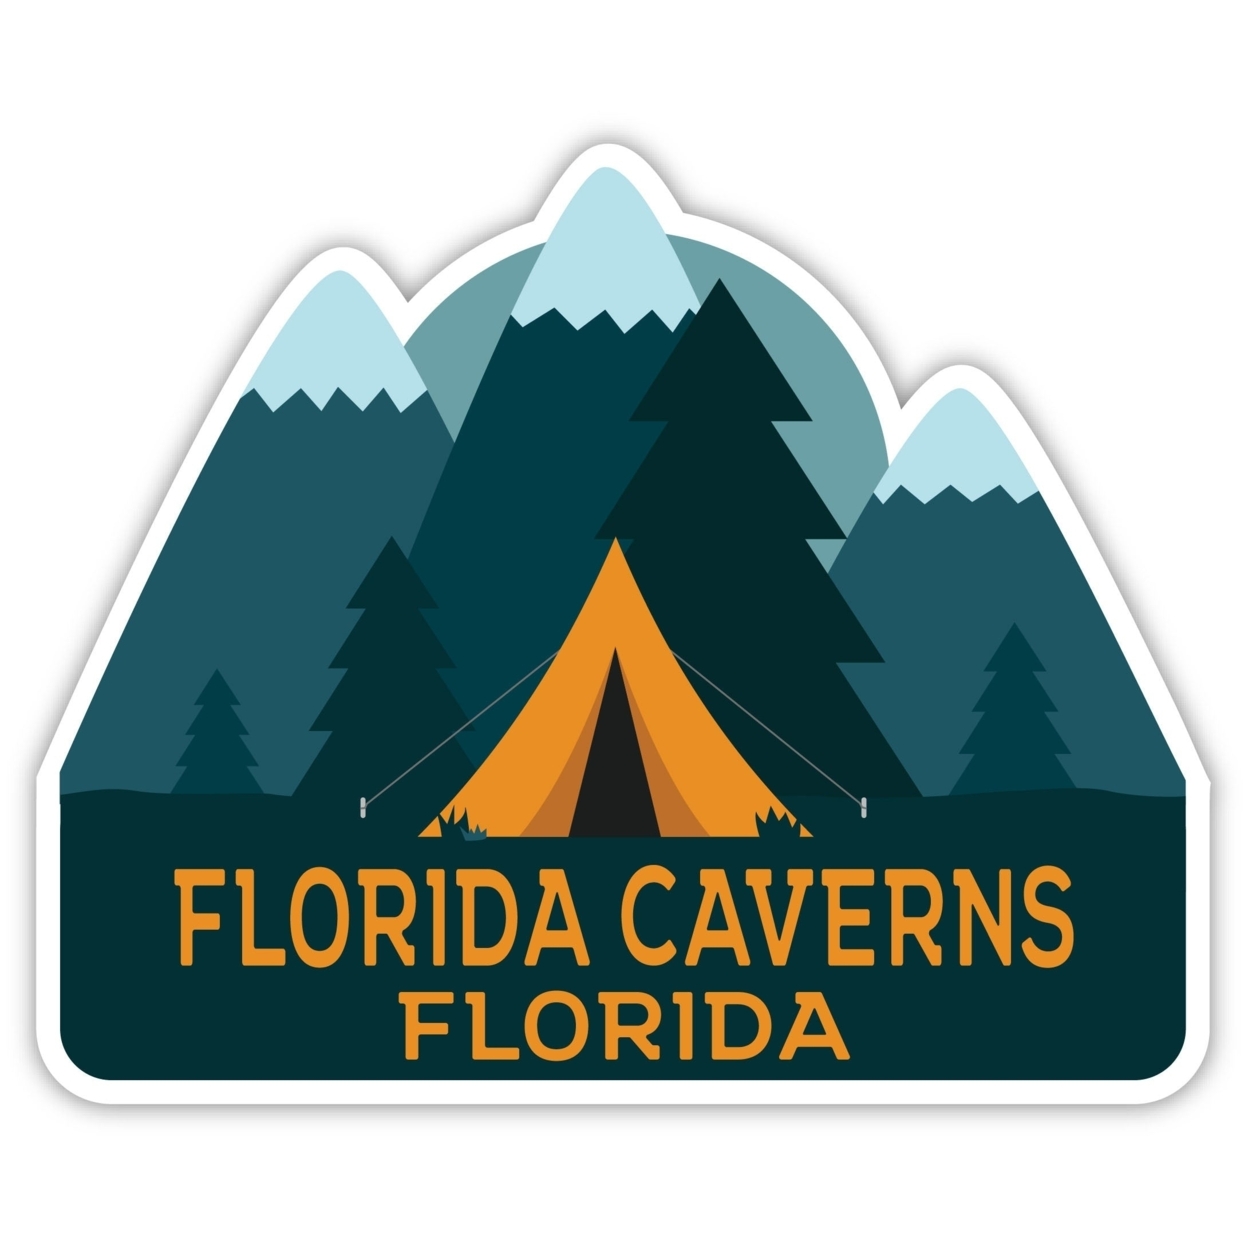 Florida Caverns Florida Souvenir Decorative Stickers (Choose Theme And Size) - 4-Pack, 6-Inch, Tent